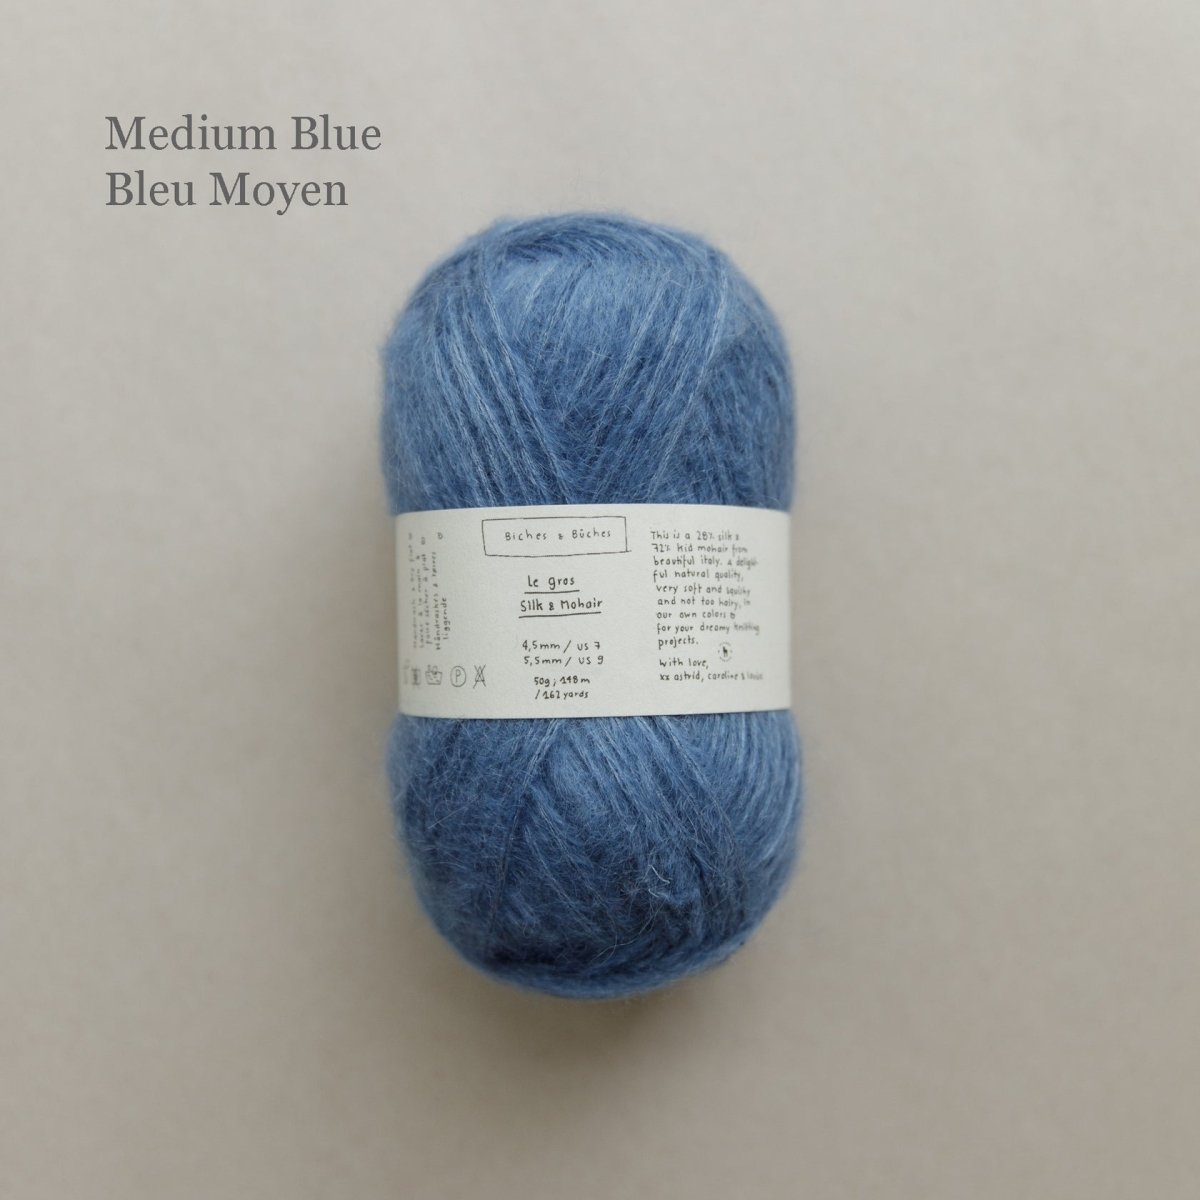 le gros silk & mohair - medium blue at Wabi Sabi